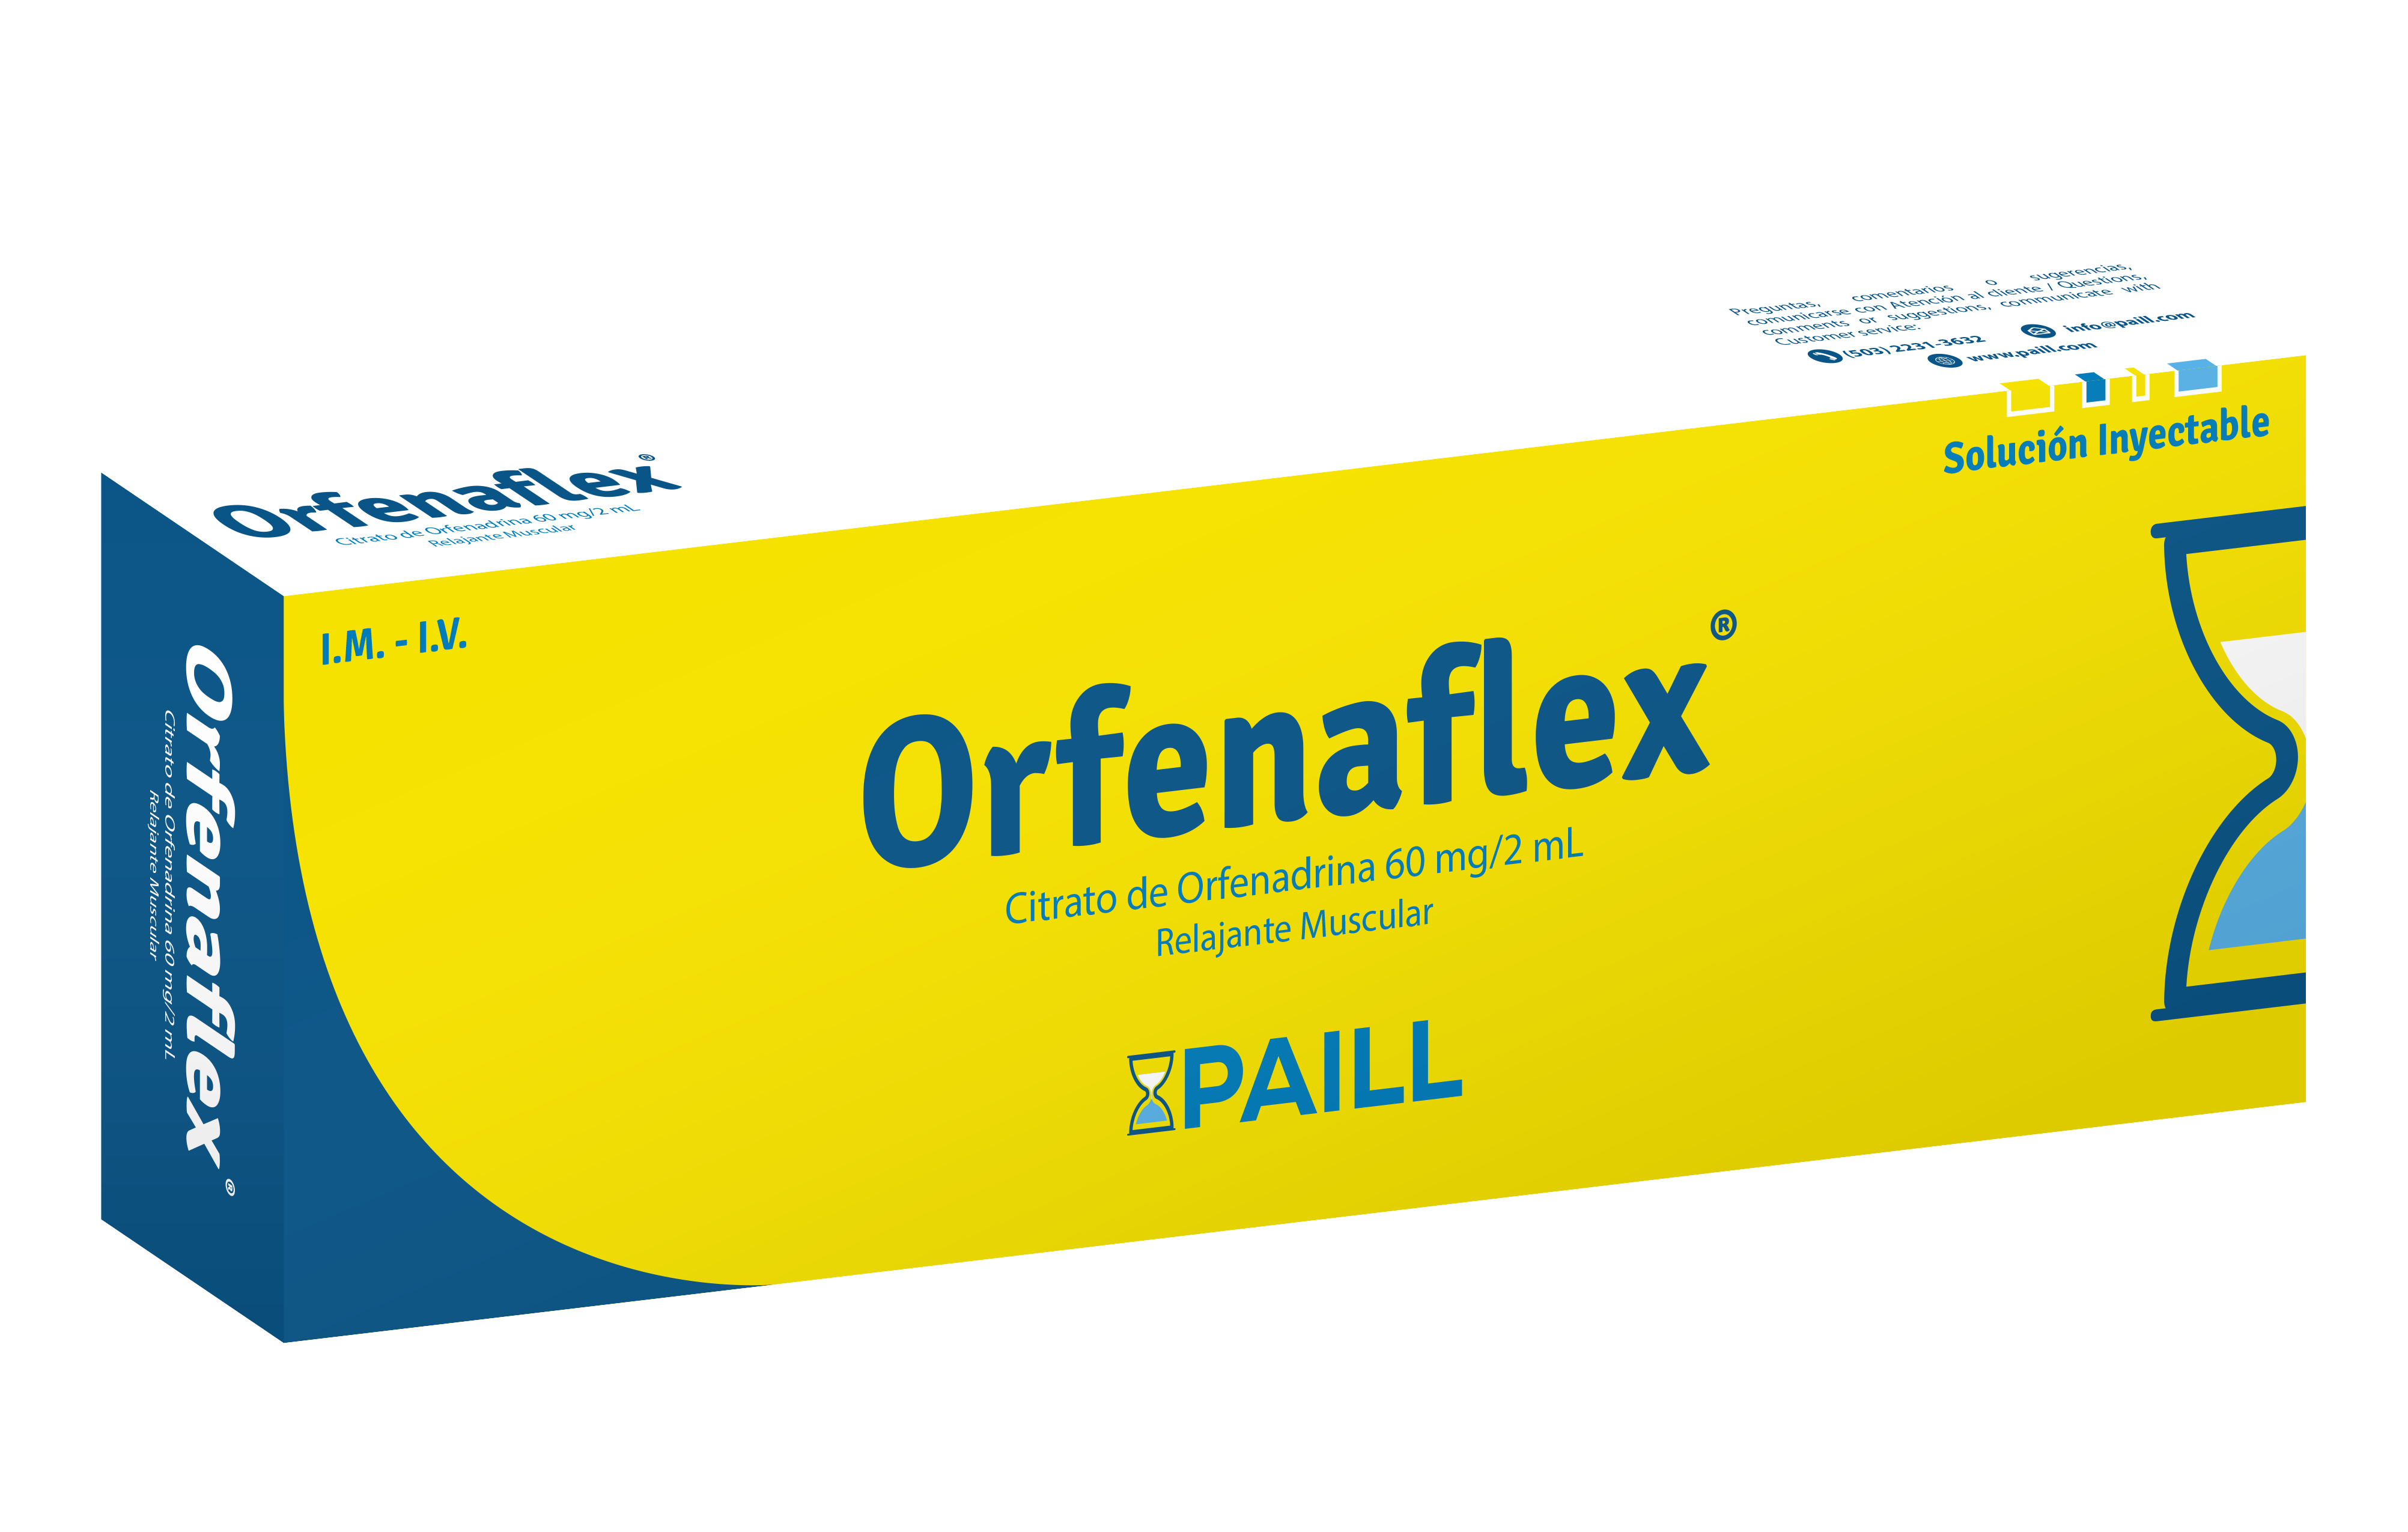 Orfenaflex